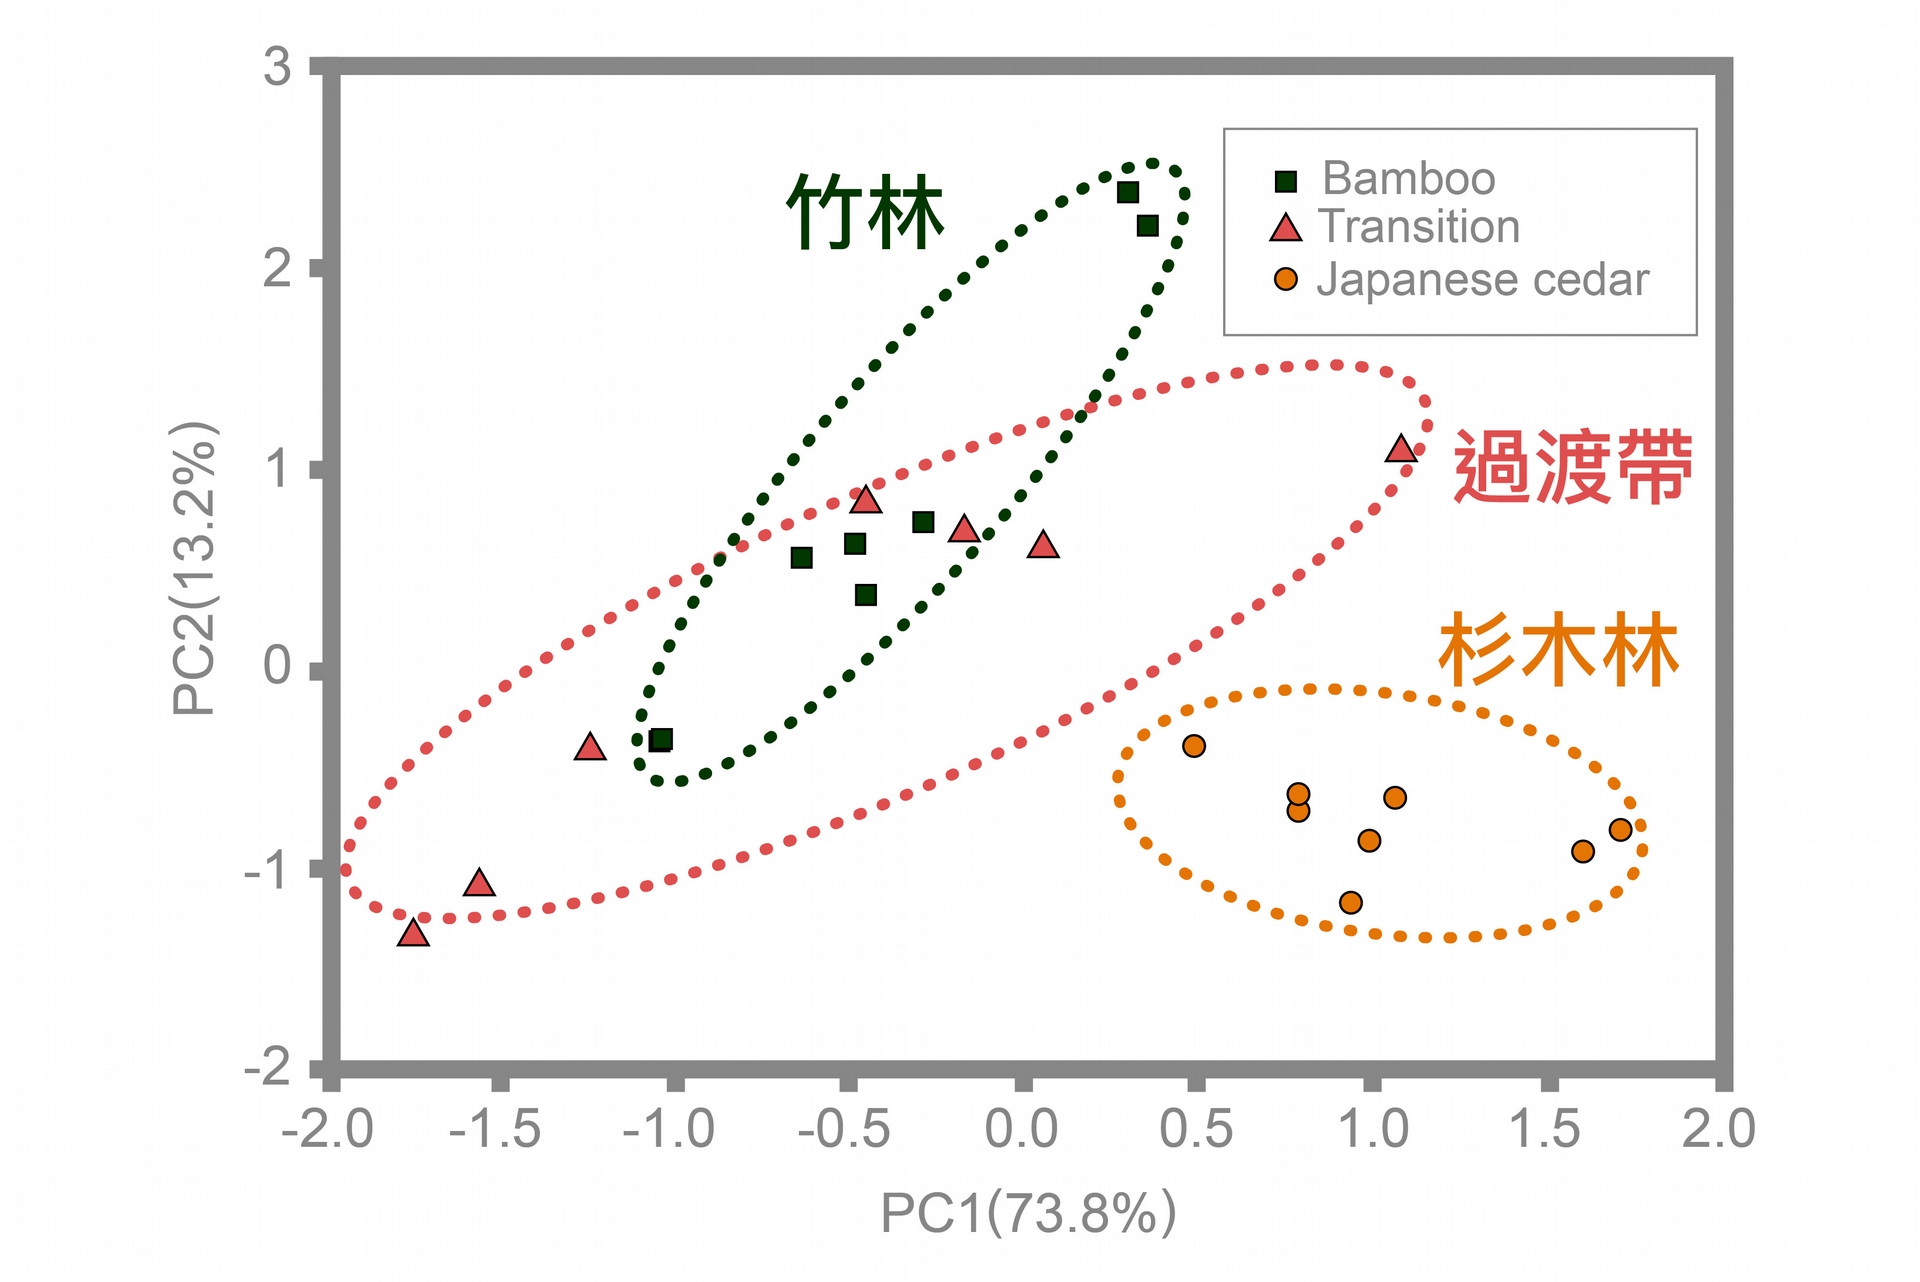 磷脂脂肪酸分析 (PLFA)：孟宗竹林與過渡帶的微生物族群結構較為相似，但與杉木林截然不同。資料來源│Chang, E.H. and Chiu C.Y.* , 2015, “Changes in soil microbial community structure and activity in a cedar plantation invaded by moso bamboo ”, Applied Soil Ecology, 91, 1-7. 圖說重製│廖英凱、張語辰 